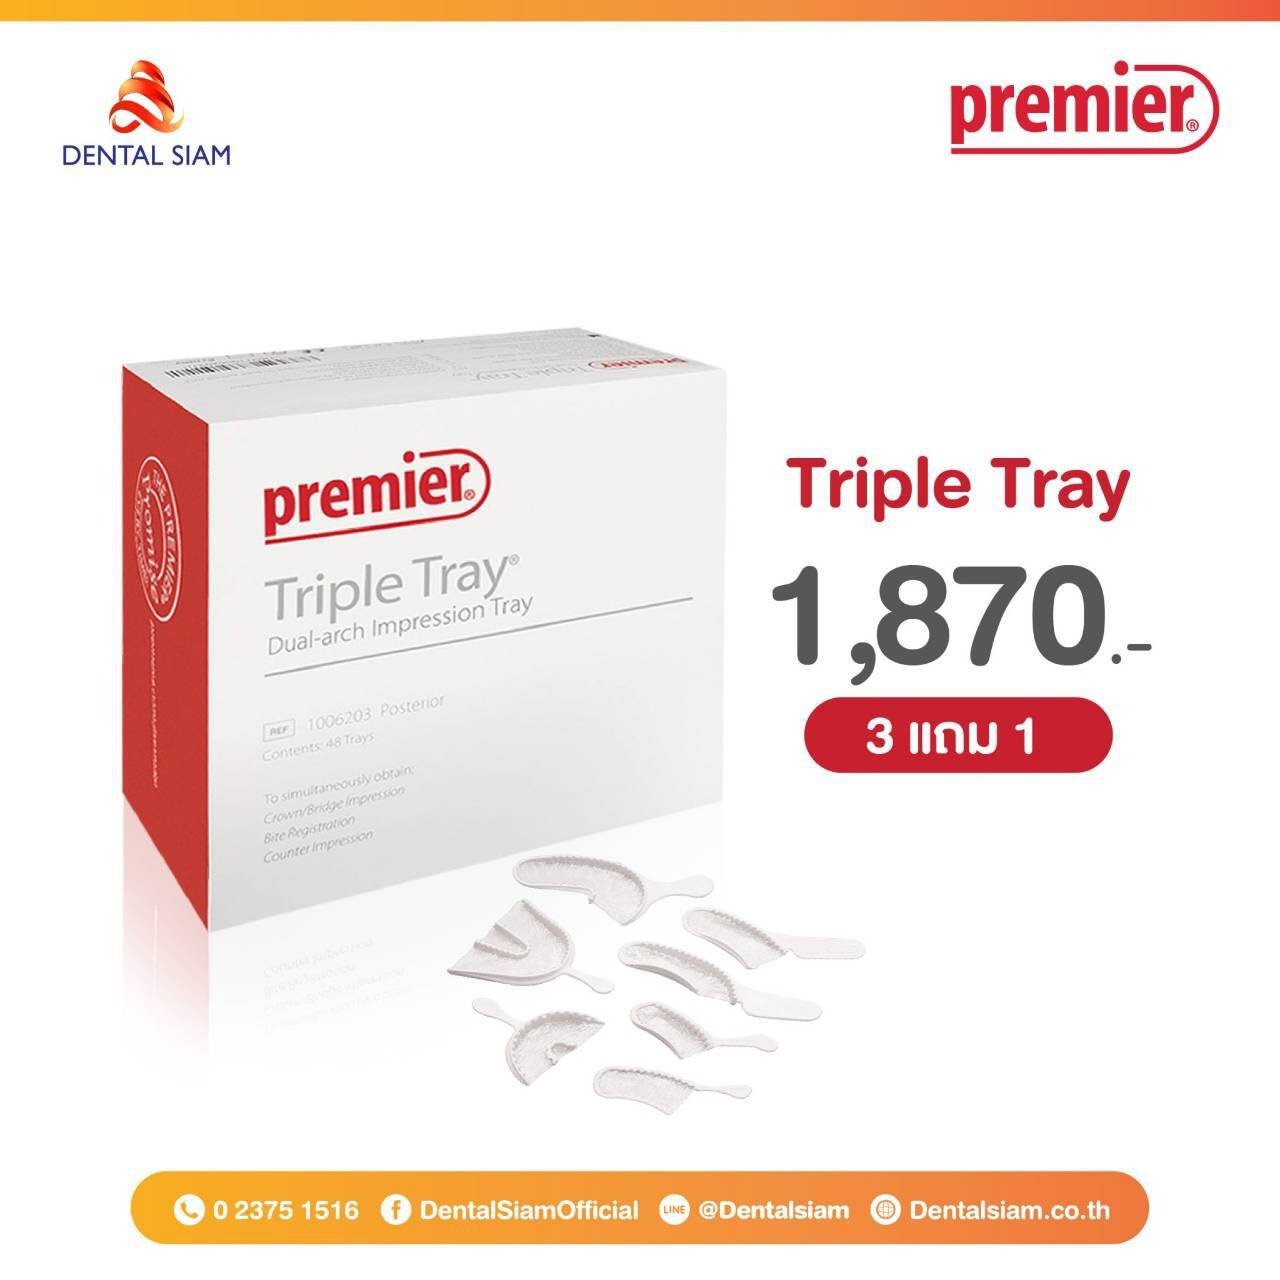 Dental Siam Promotion "Triple Tray"